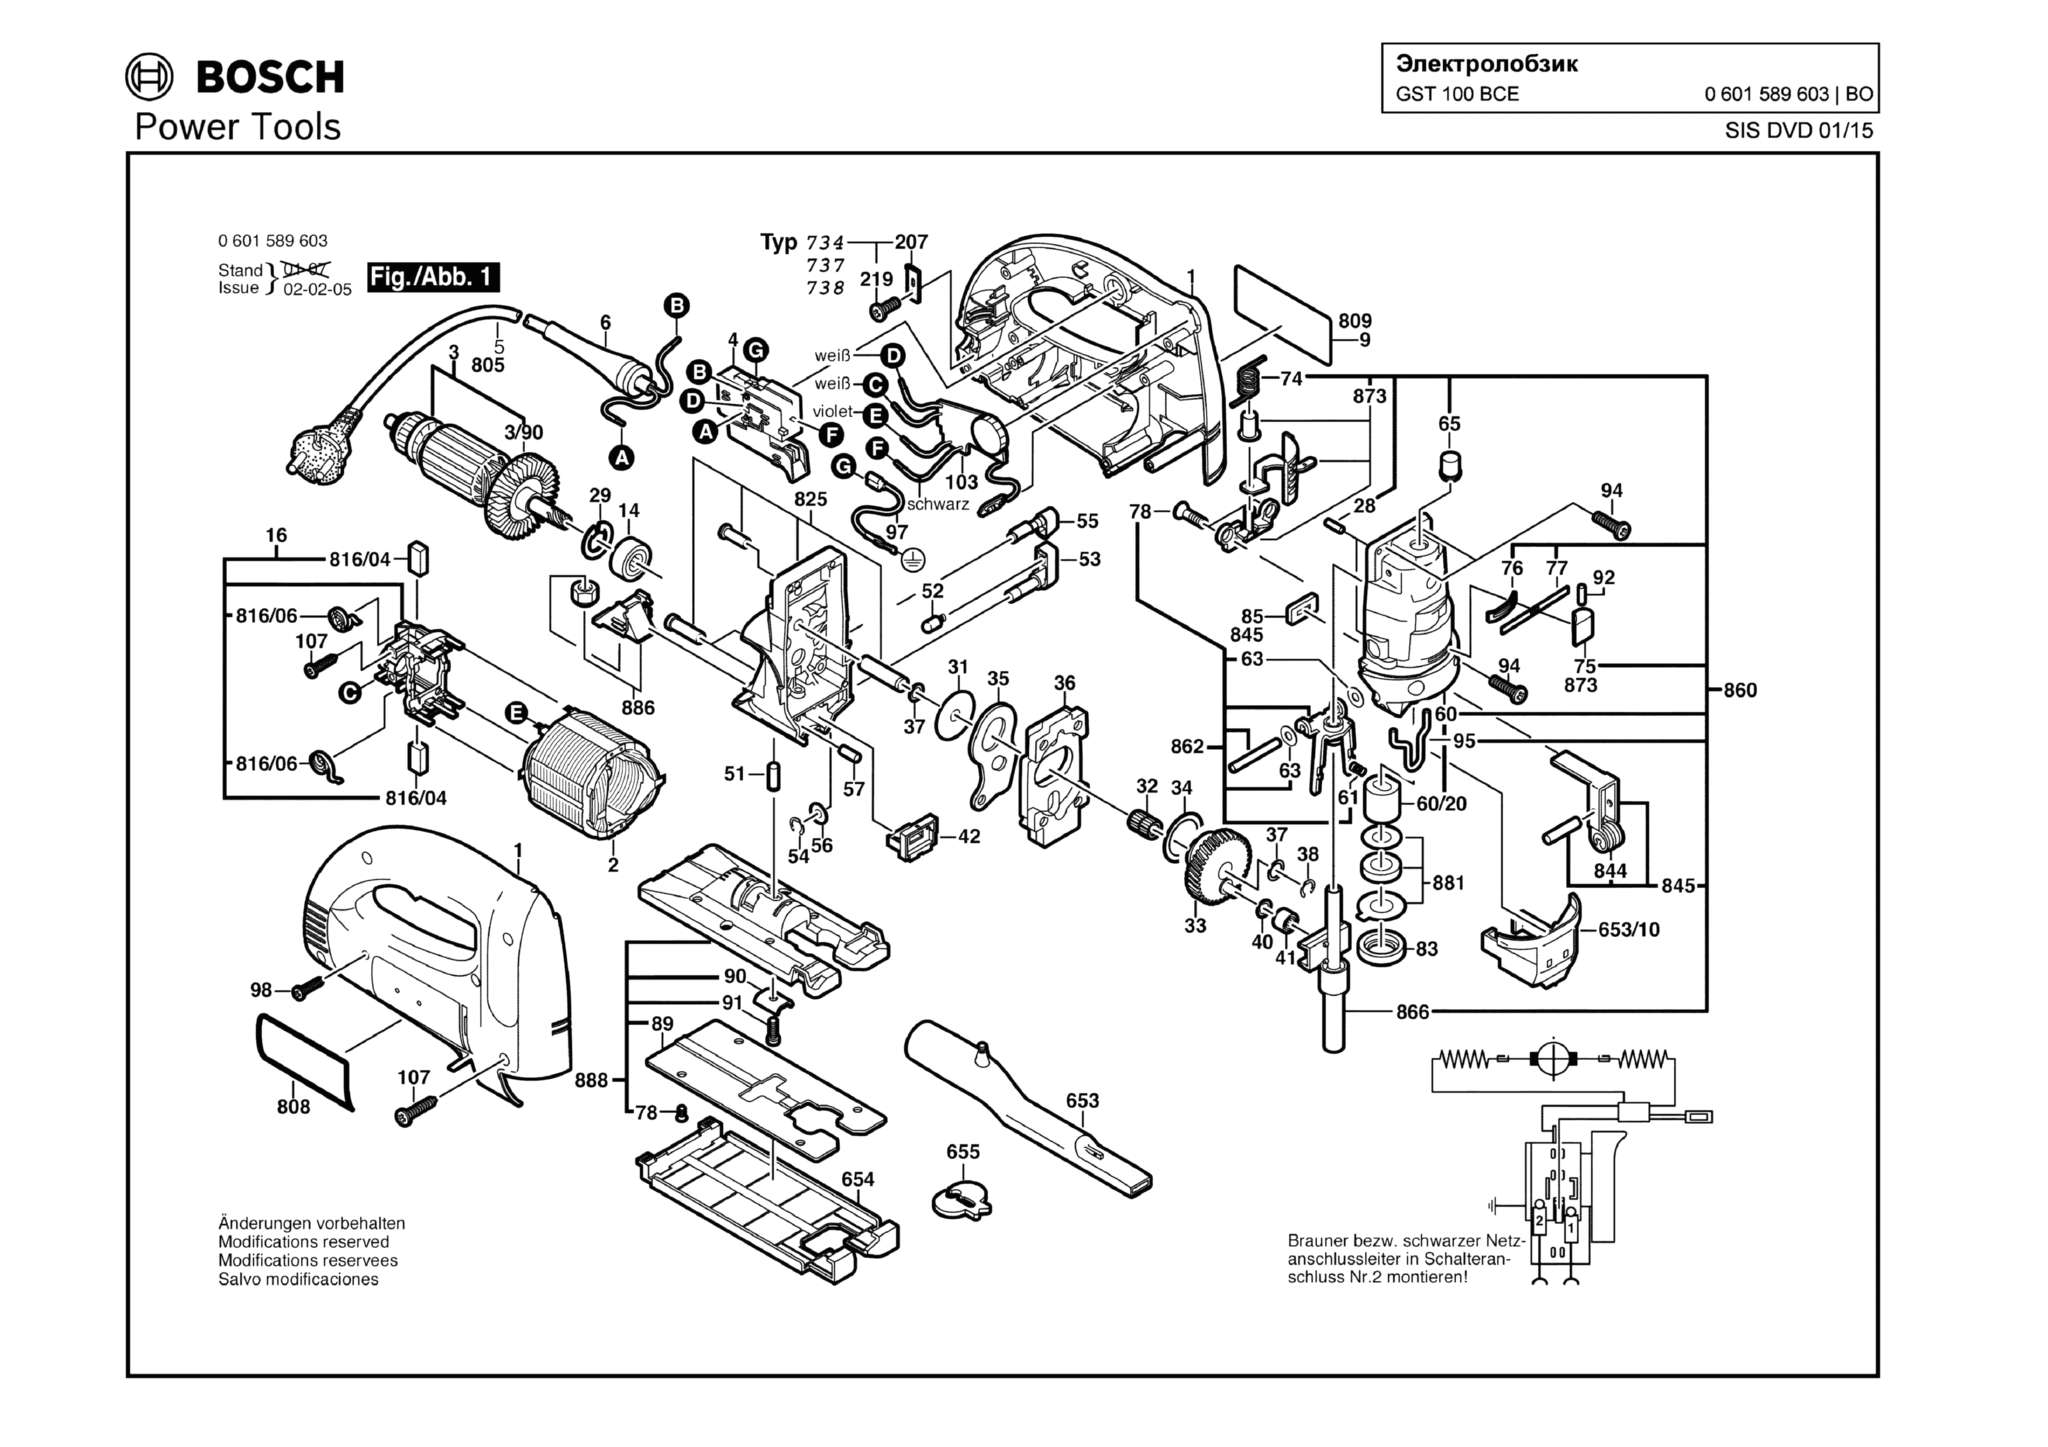 Запчасти, схема и деталировка Bosch GST 100 BCE (ТИП 0601589603)